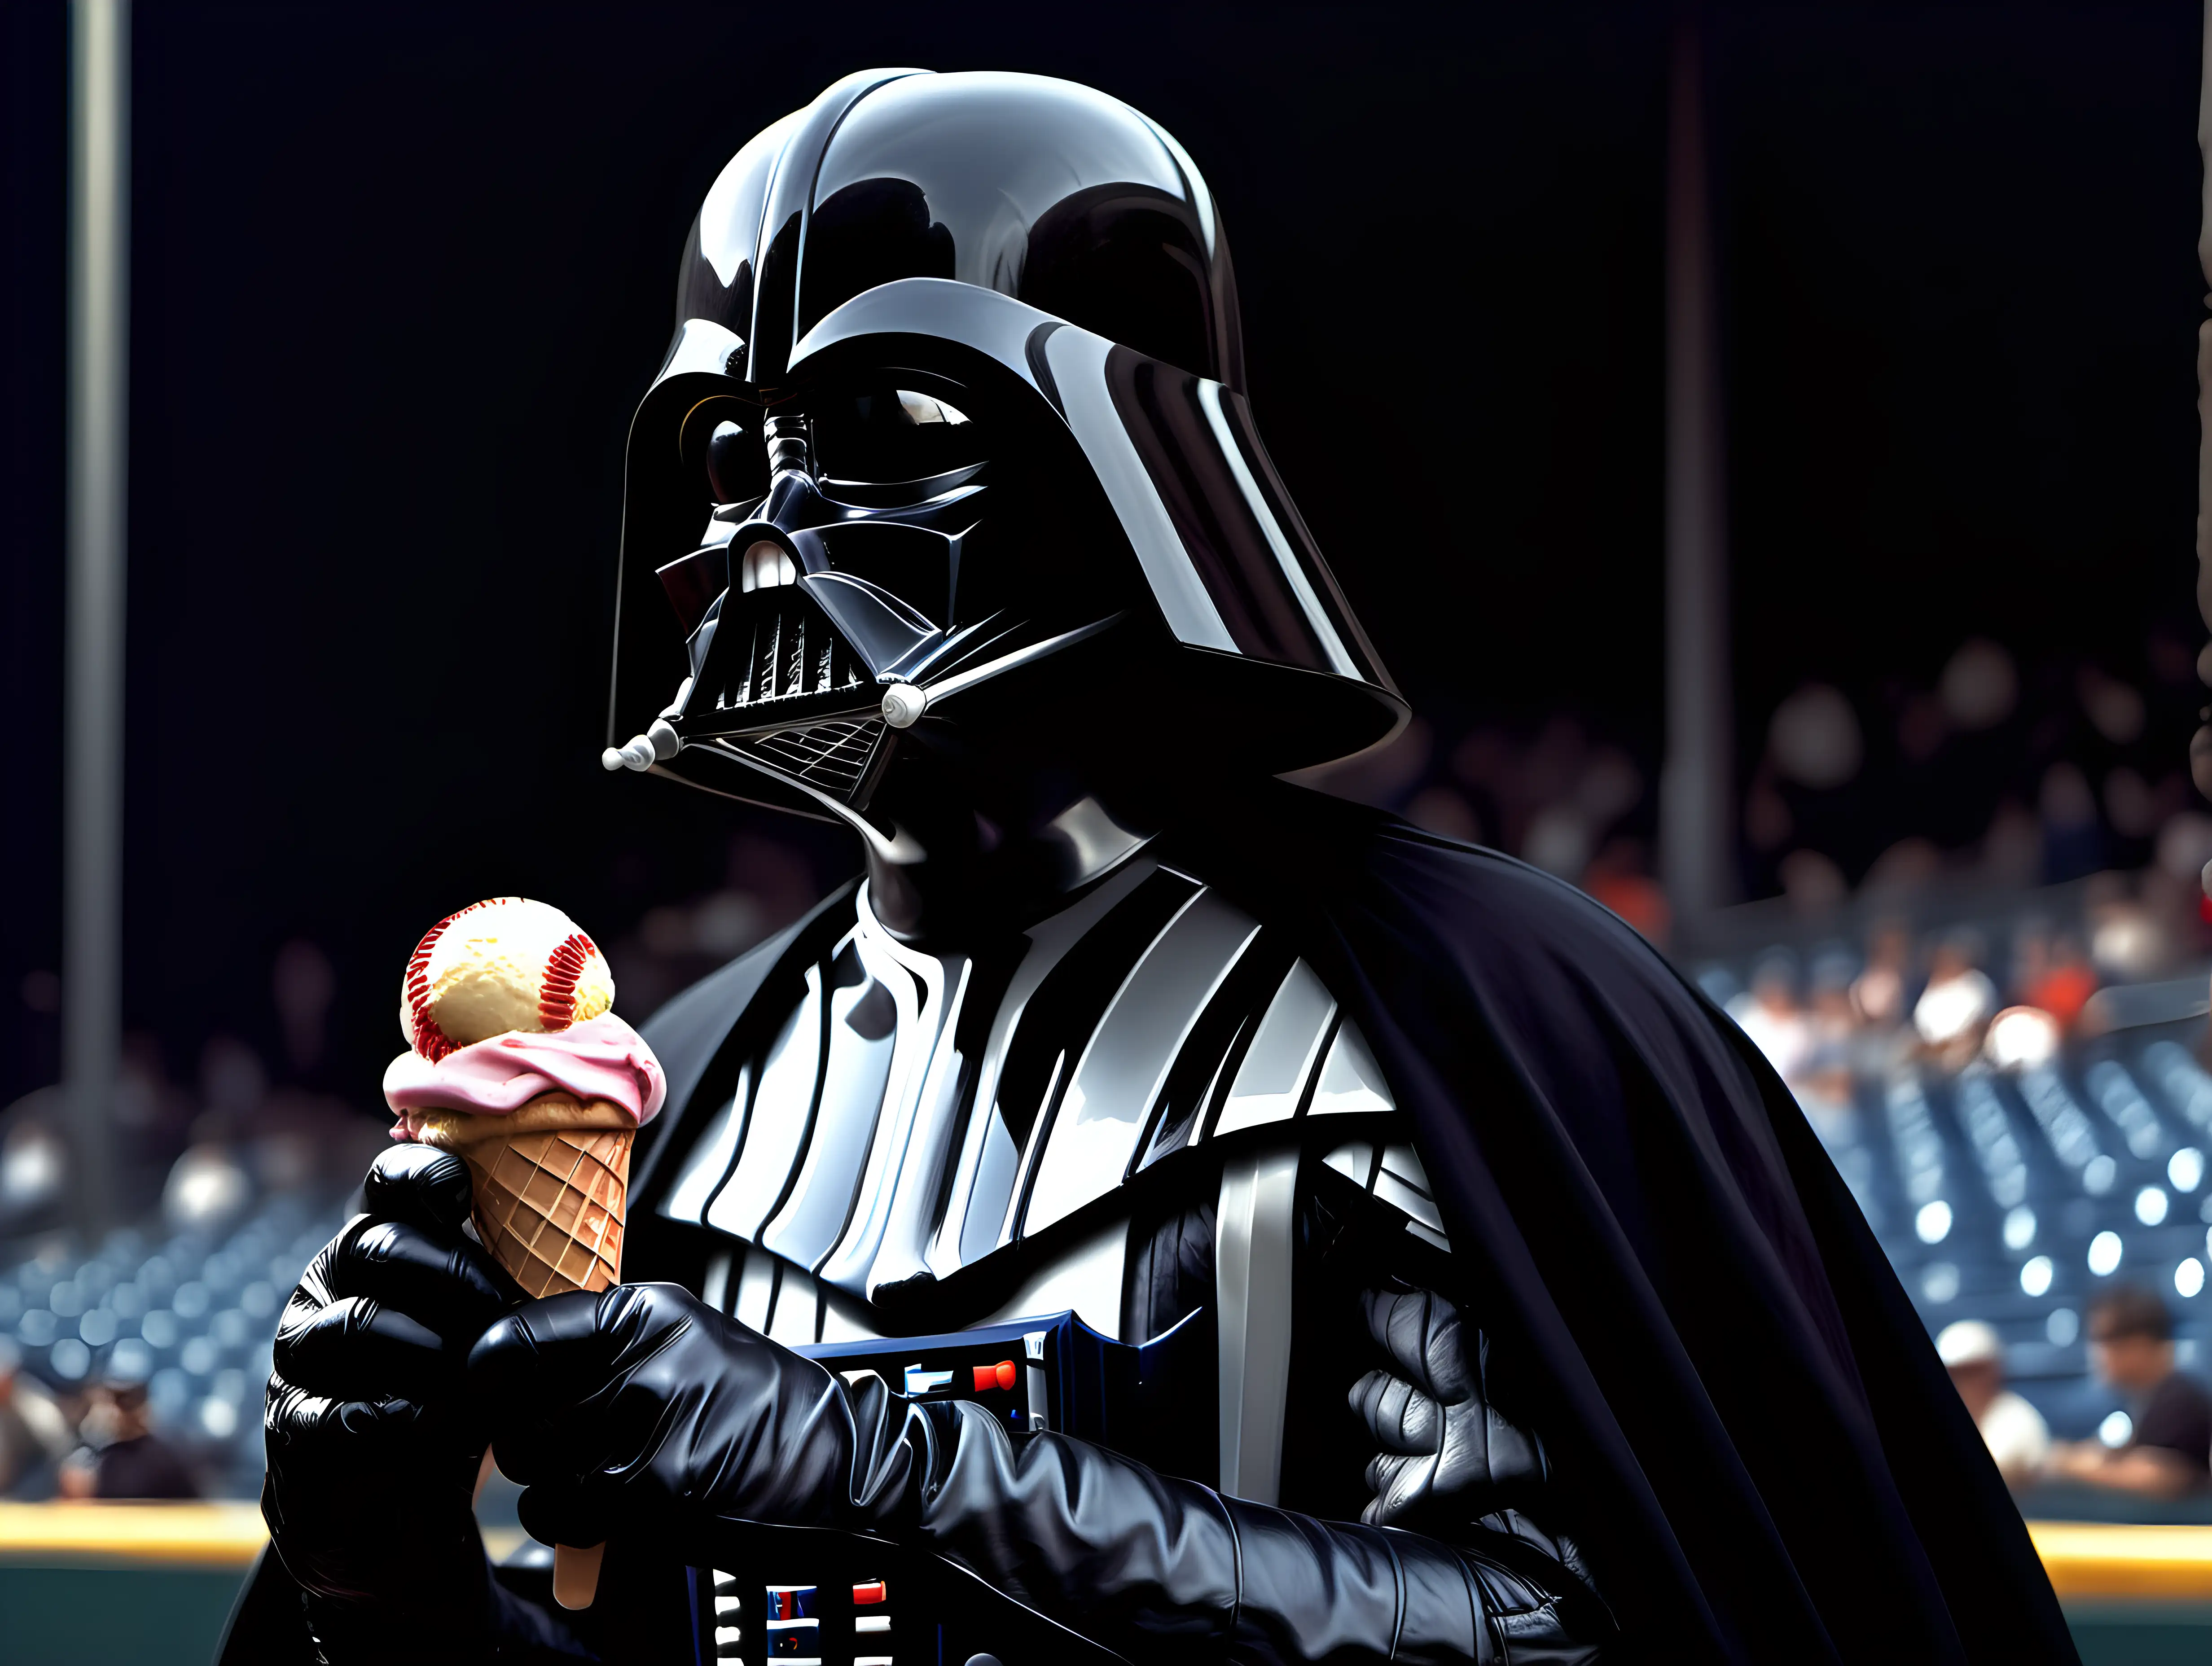 Darth Vader Enjoying Ice Cream at Baseball Game Photorealistic Art by Frank Frazetta